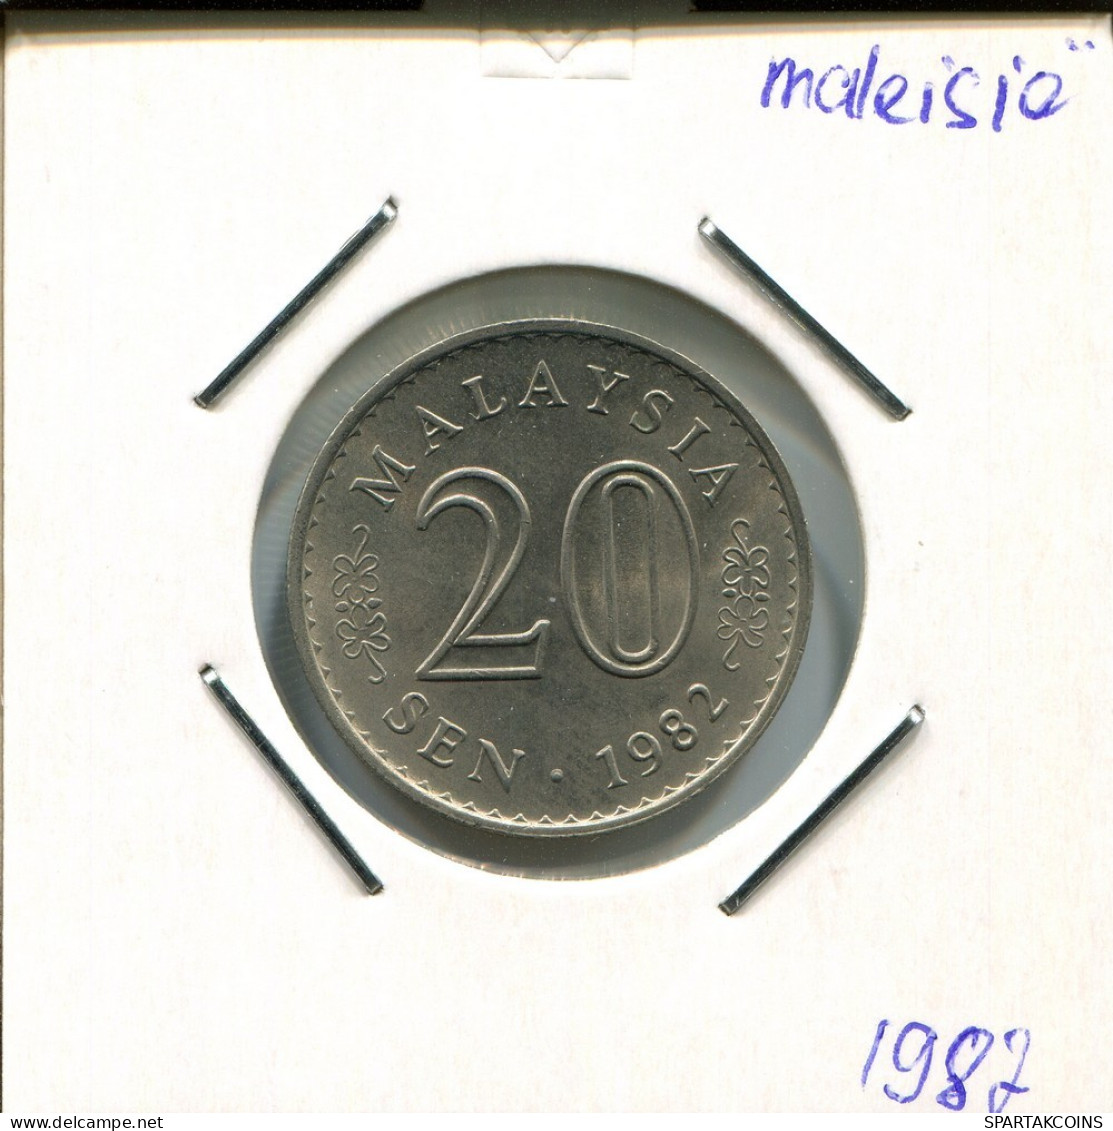 20 SEN 1982 MALAYSIEN MALAYSIA Münze #AR459.D.A - Malaysie